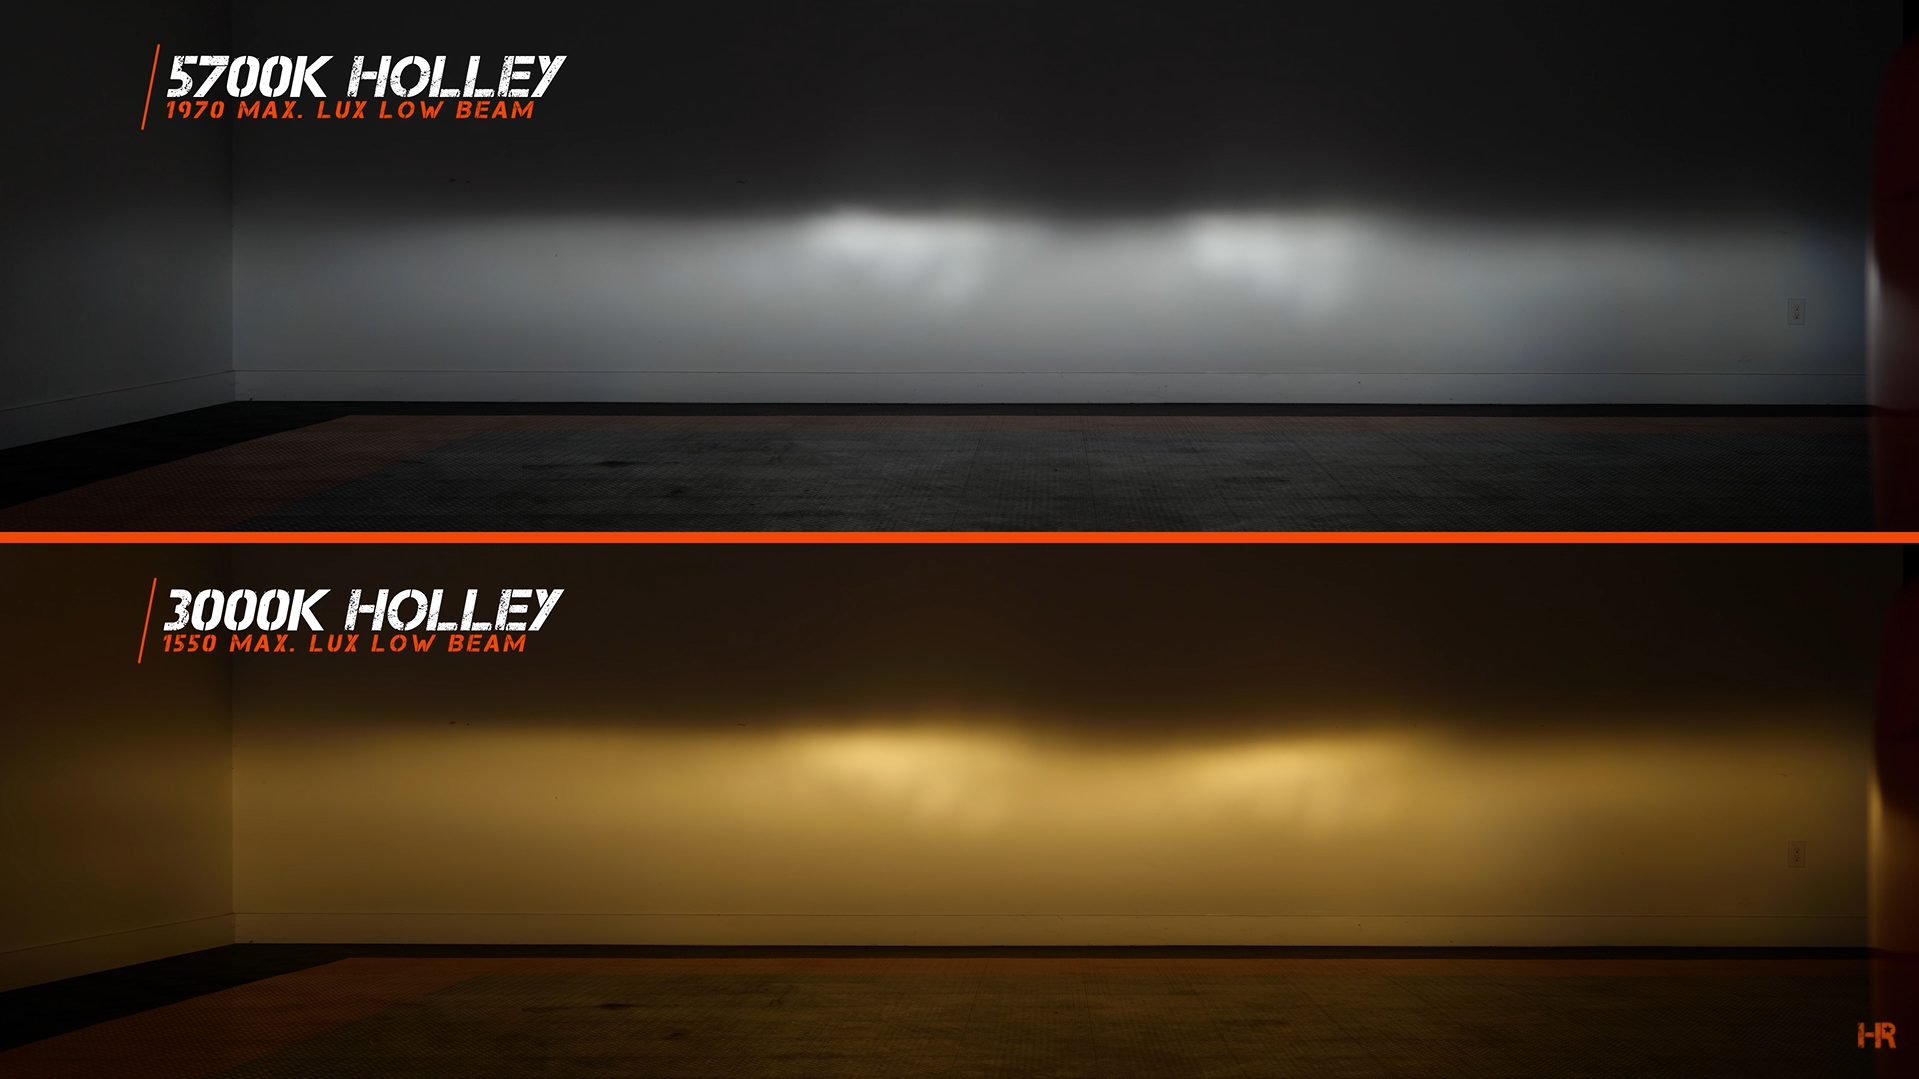 The 5700K Holley Retrobright Headlight LED beam pattern versus the 3700K LED headlight on low beam.